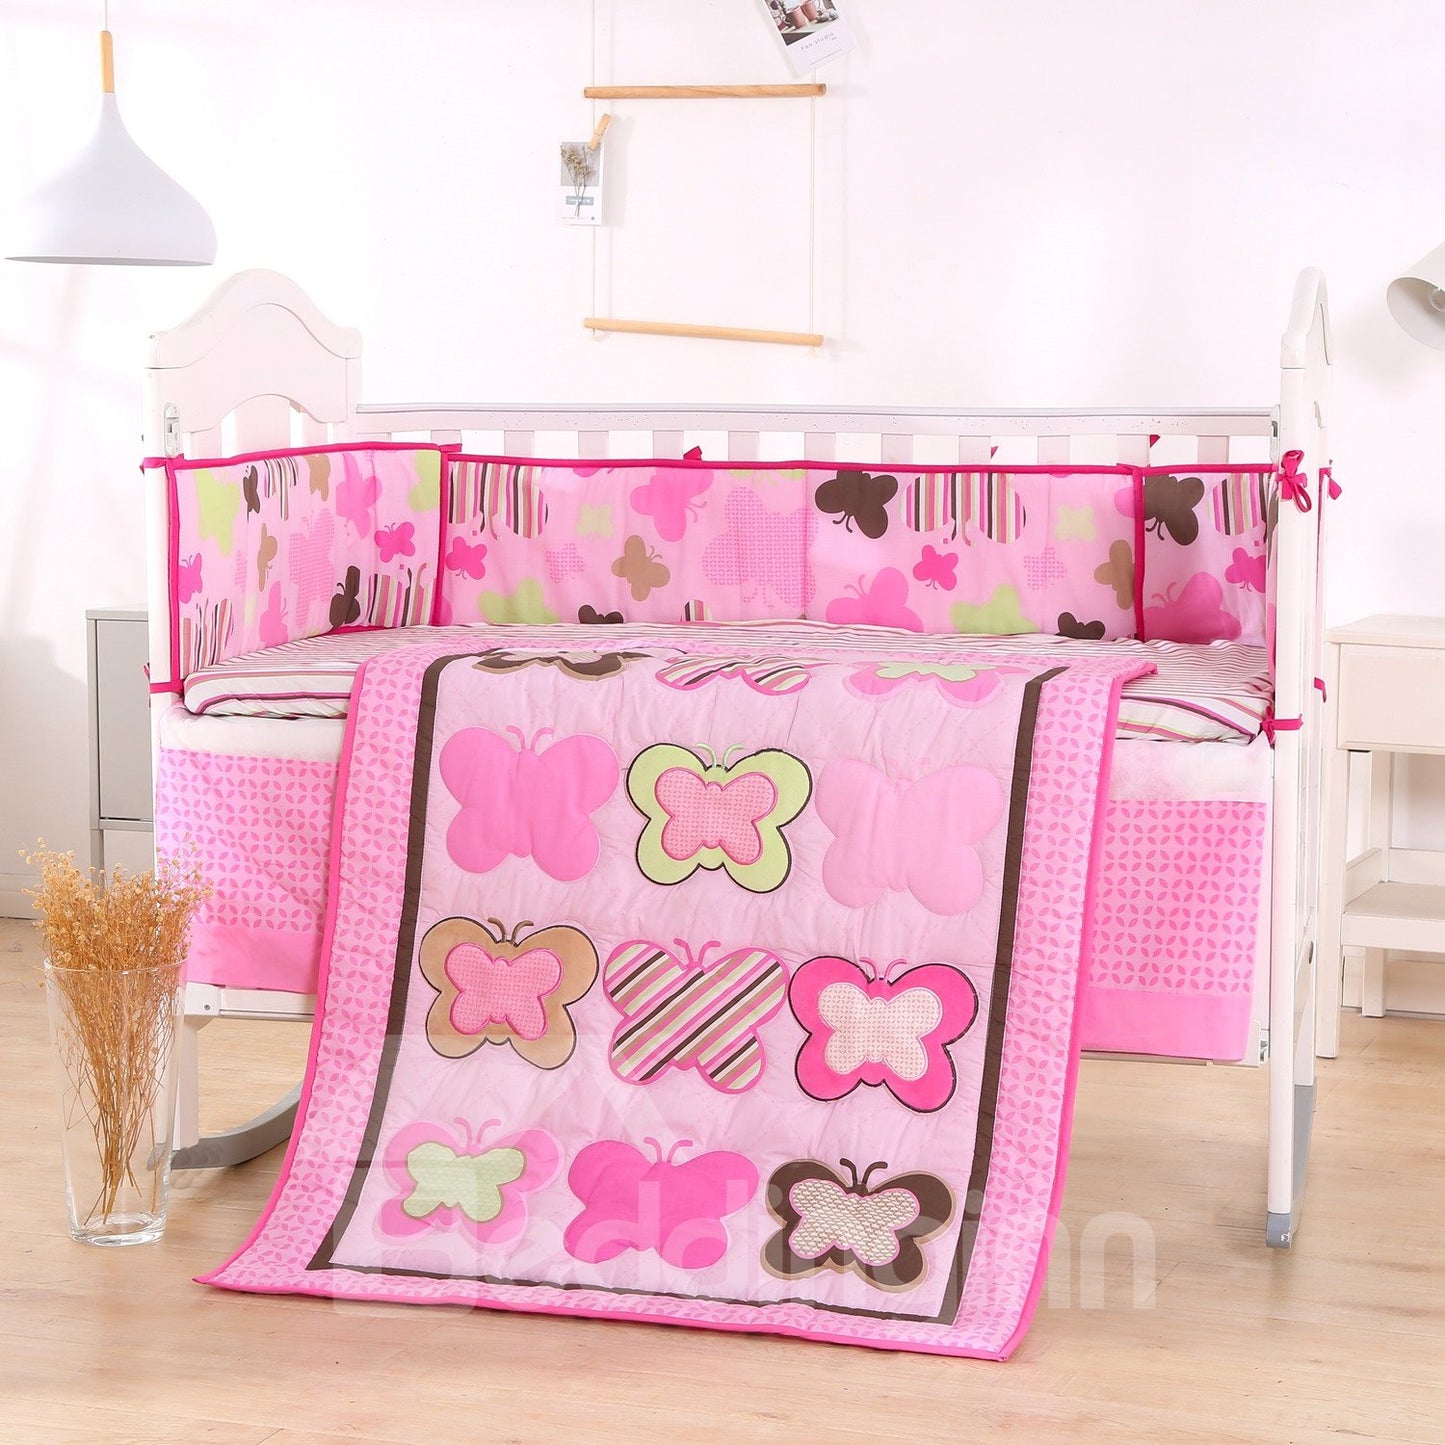 4-teilige Bettwäsche-Sets für Kinderbetten, Schmetterlingswiese, süßes Rosa